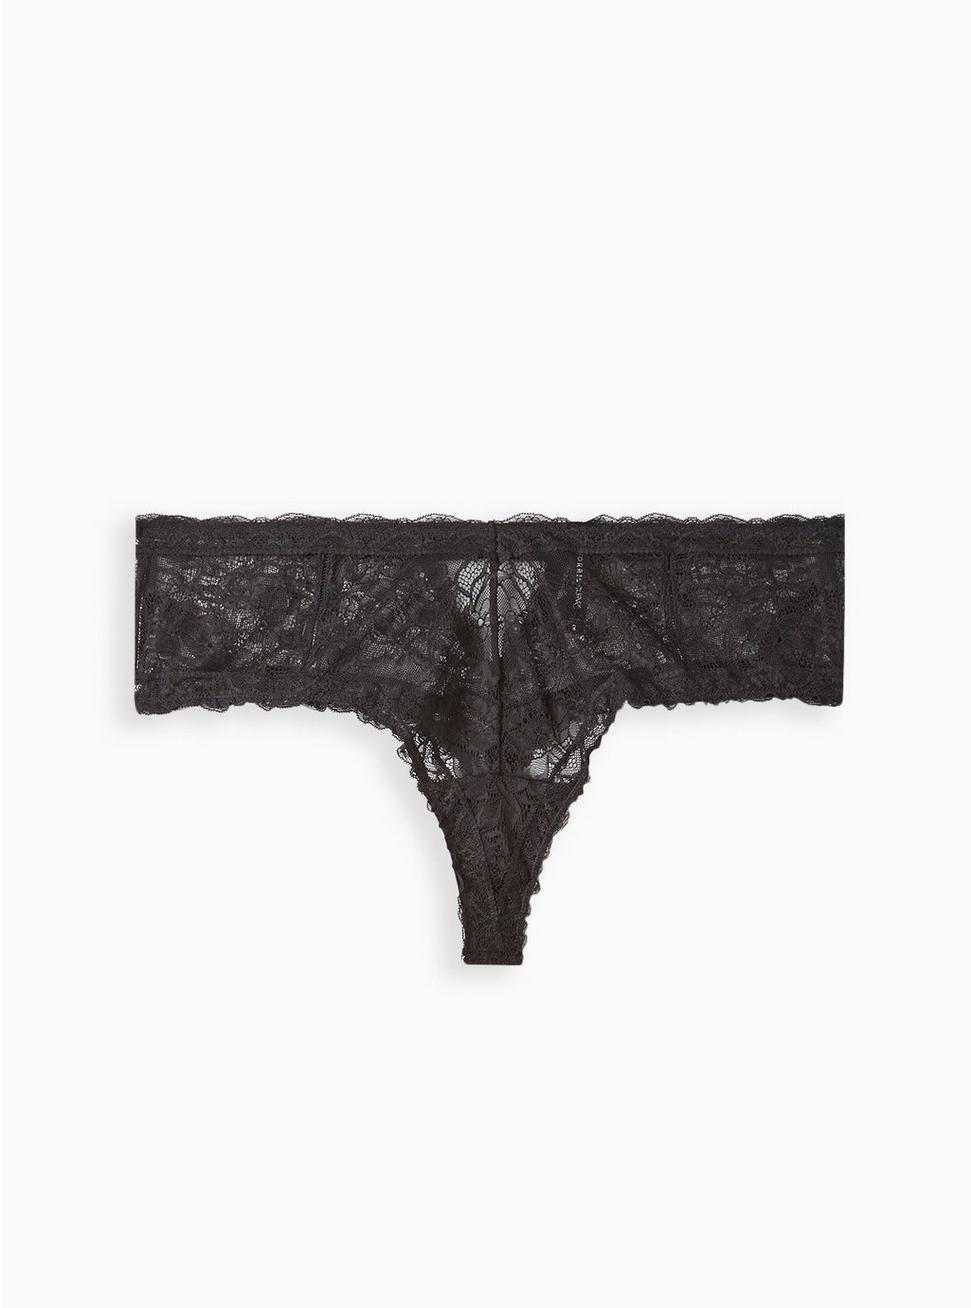 High Waist Cut Out Thong Panty - Lace Black, RICH BLACK, hi-res